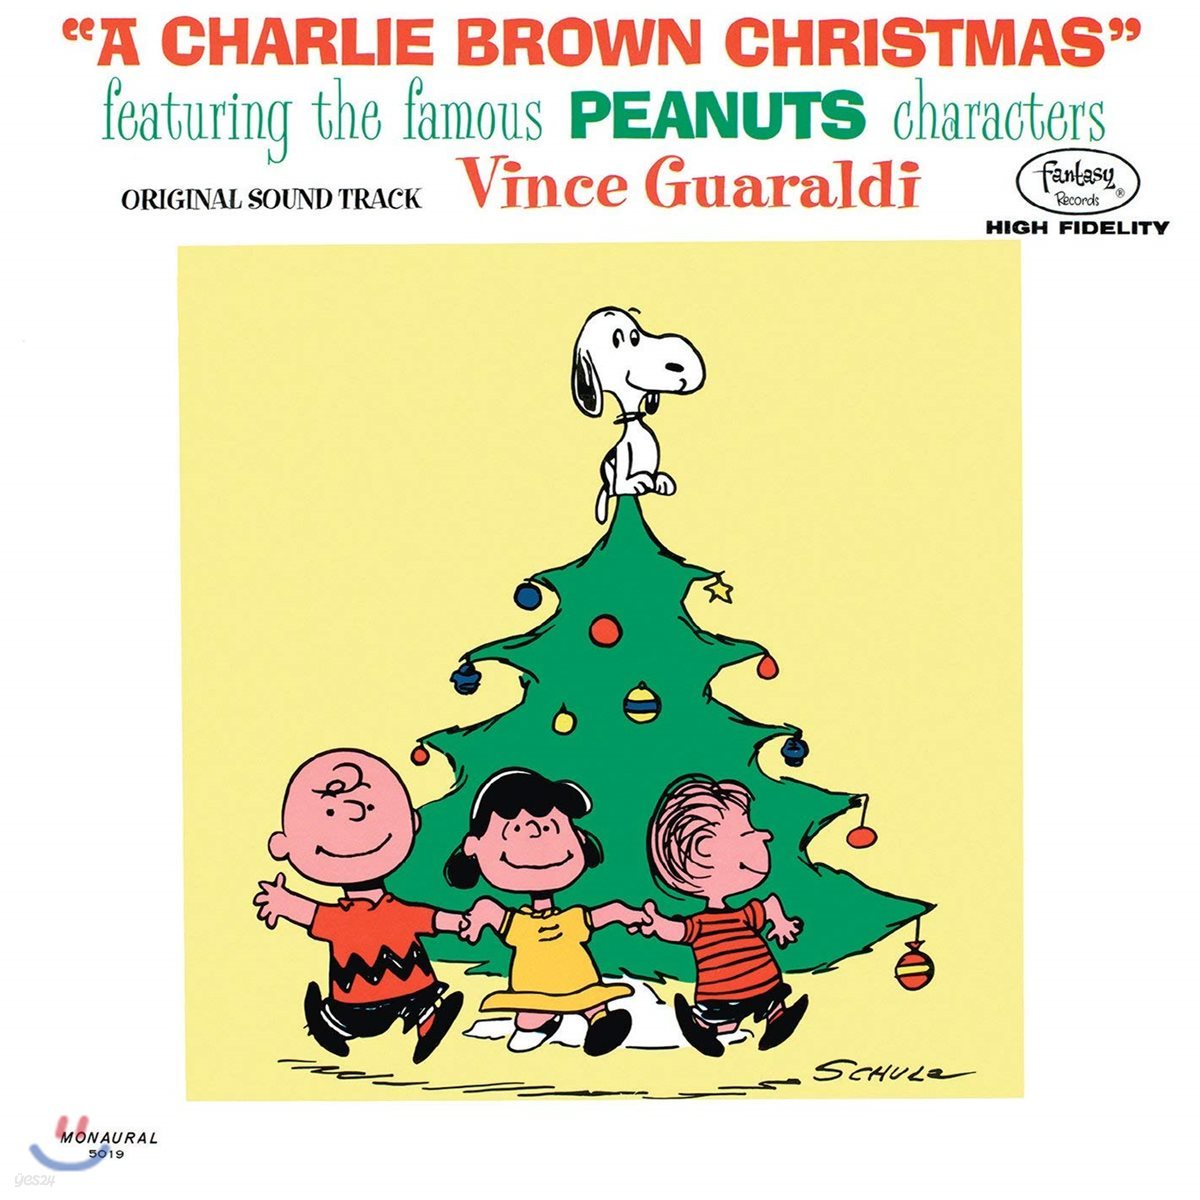 Vince Guaraldi Trio 찰리 브라운 크리스마스 음악 (A Charlie Brown Christmas)